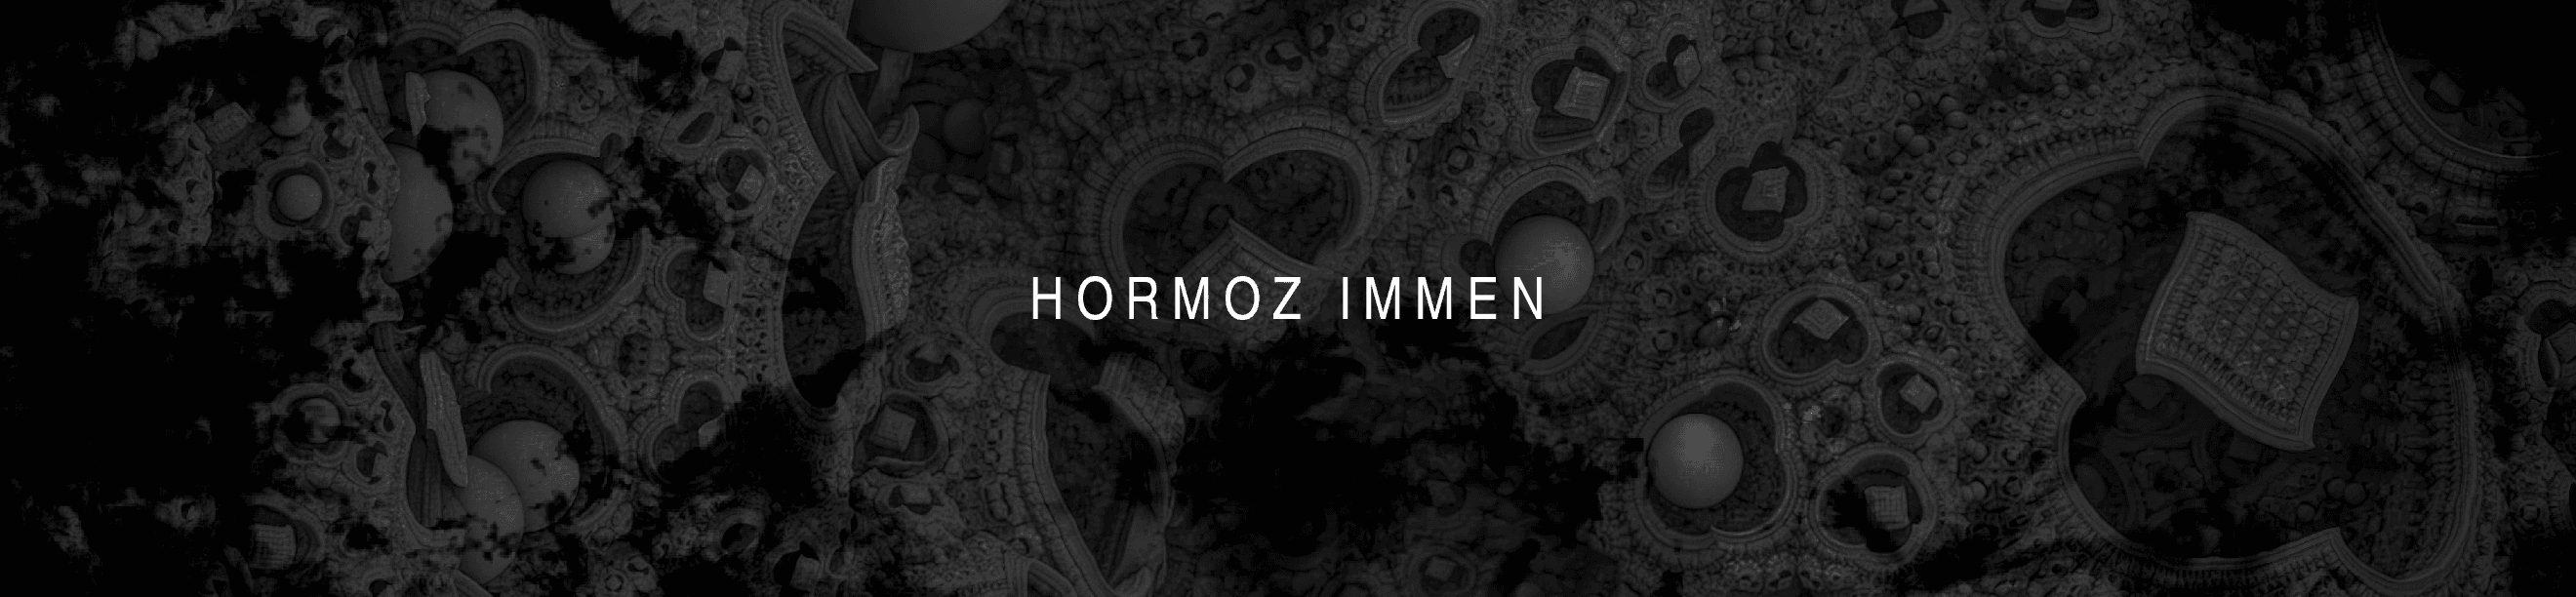 Hormoz banner